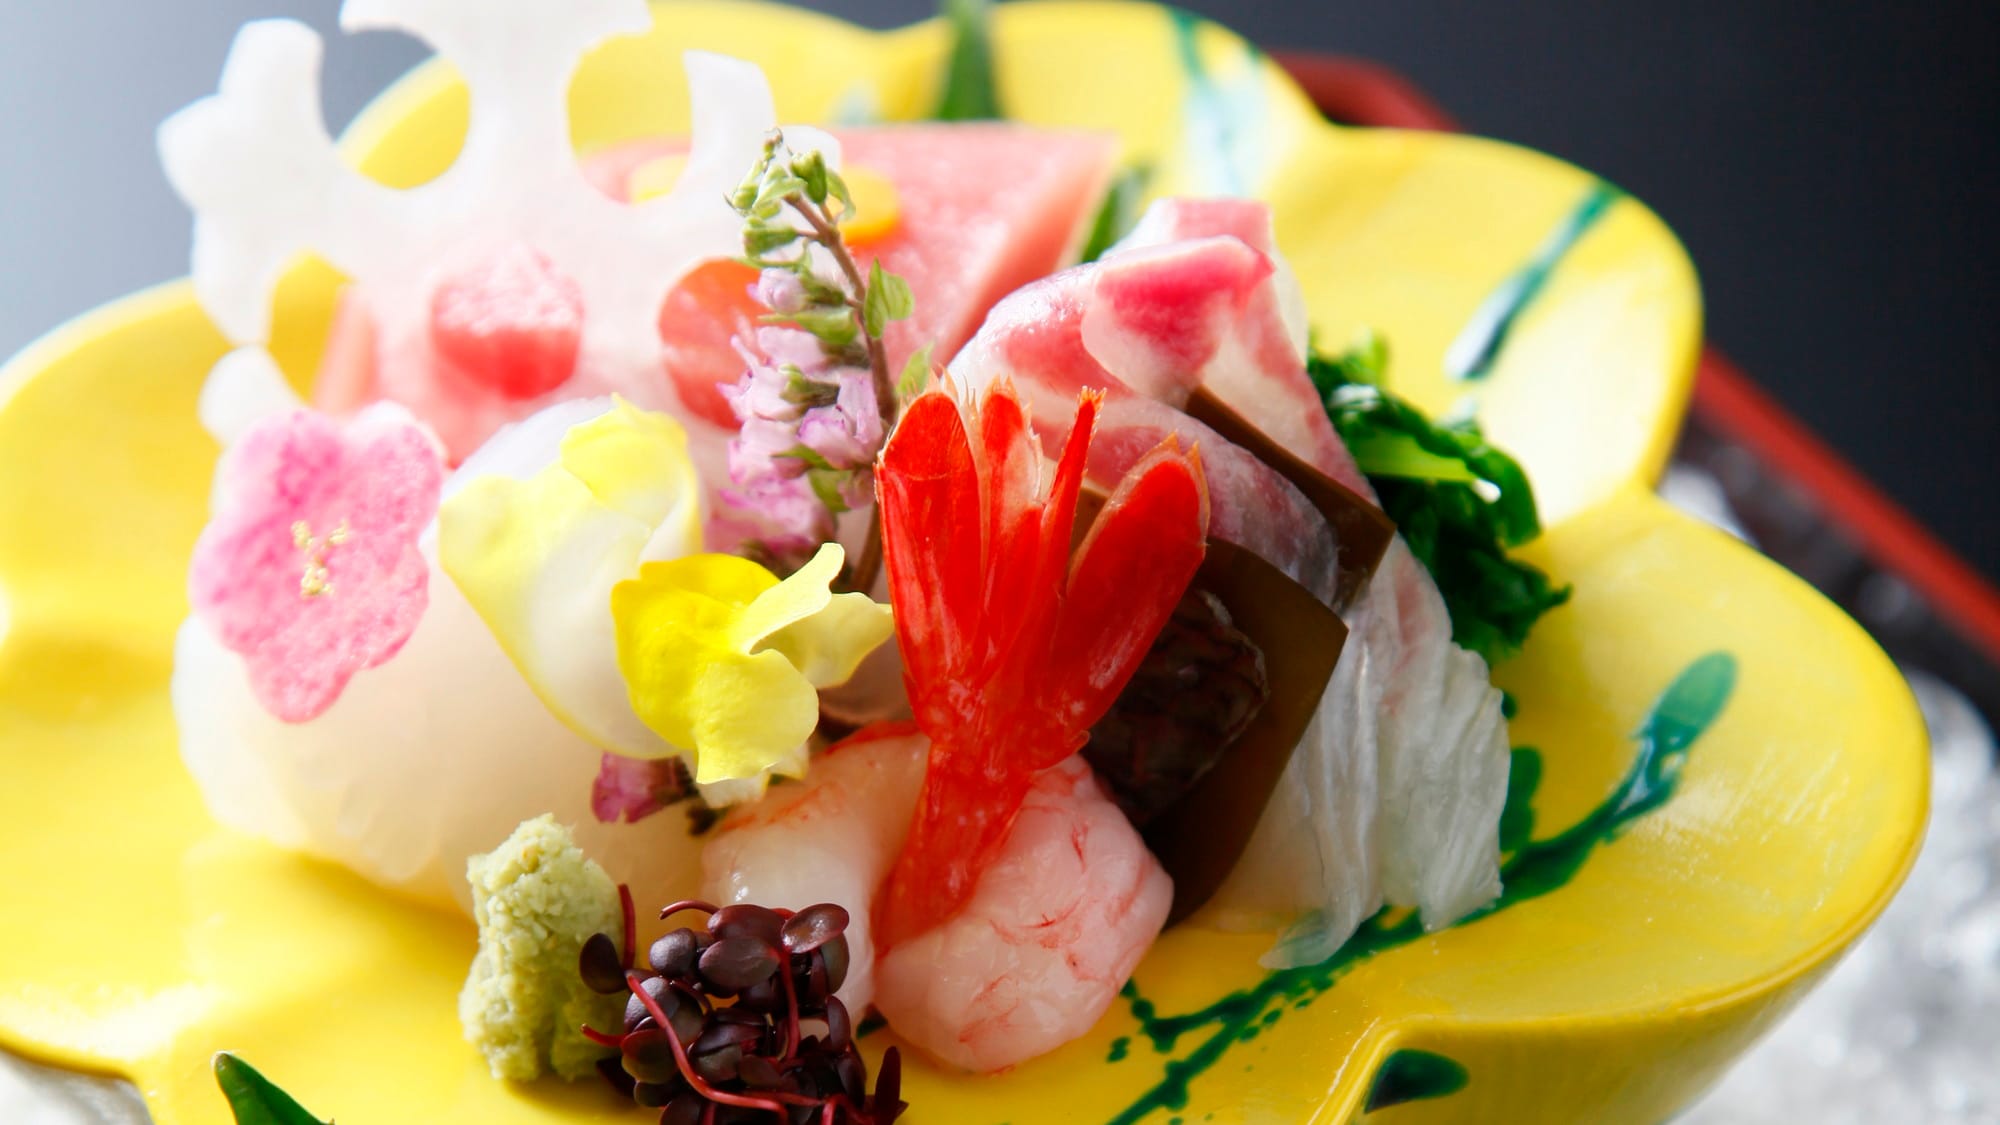 Silakan nikmati masakan kaiseki musiman yang menyenangkan dengan mata penuh warna. ※gambar